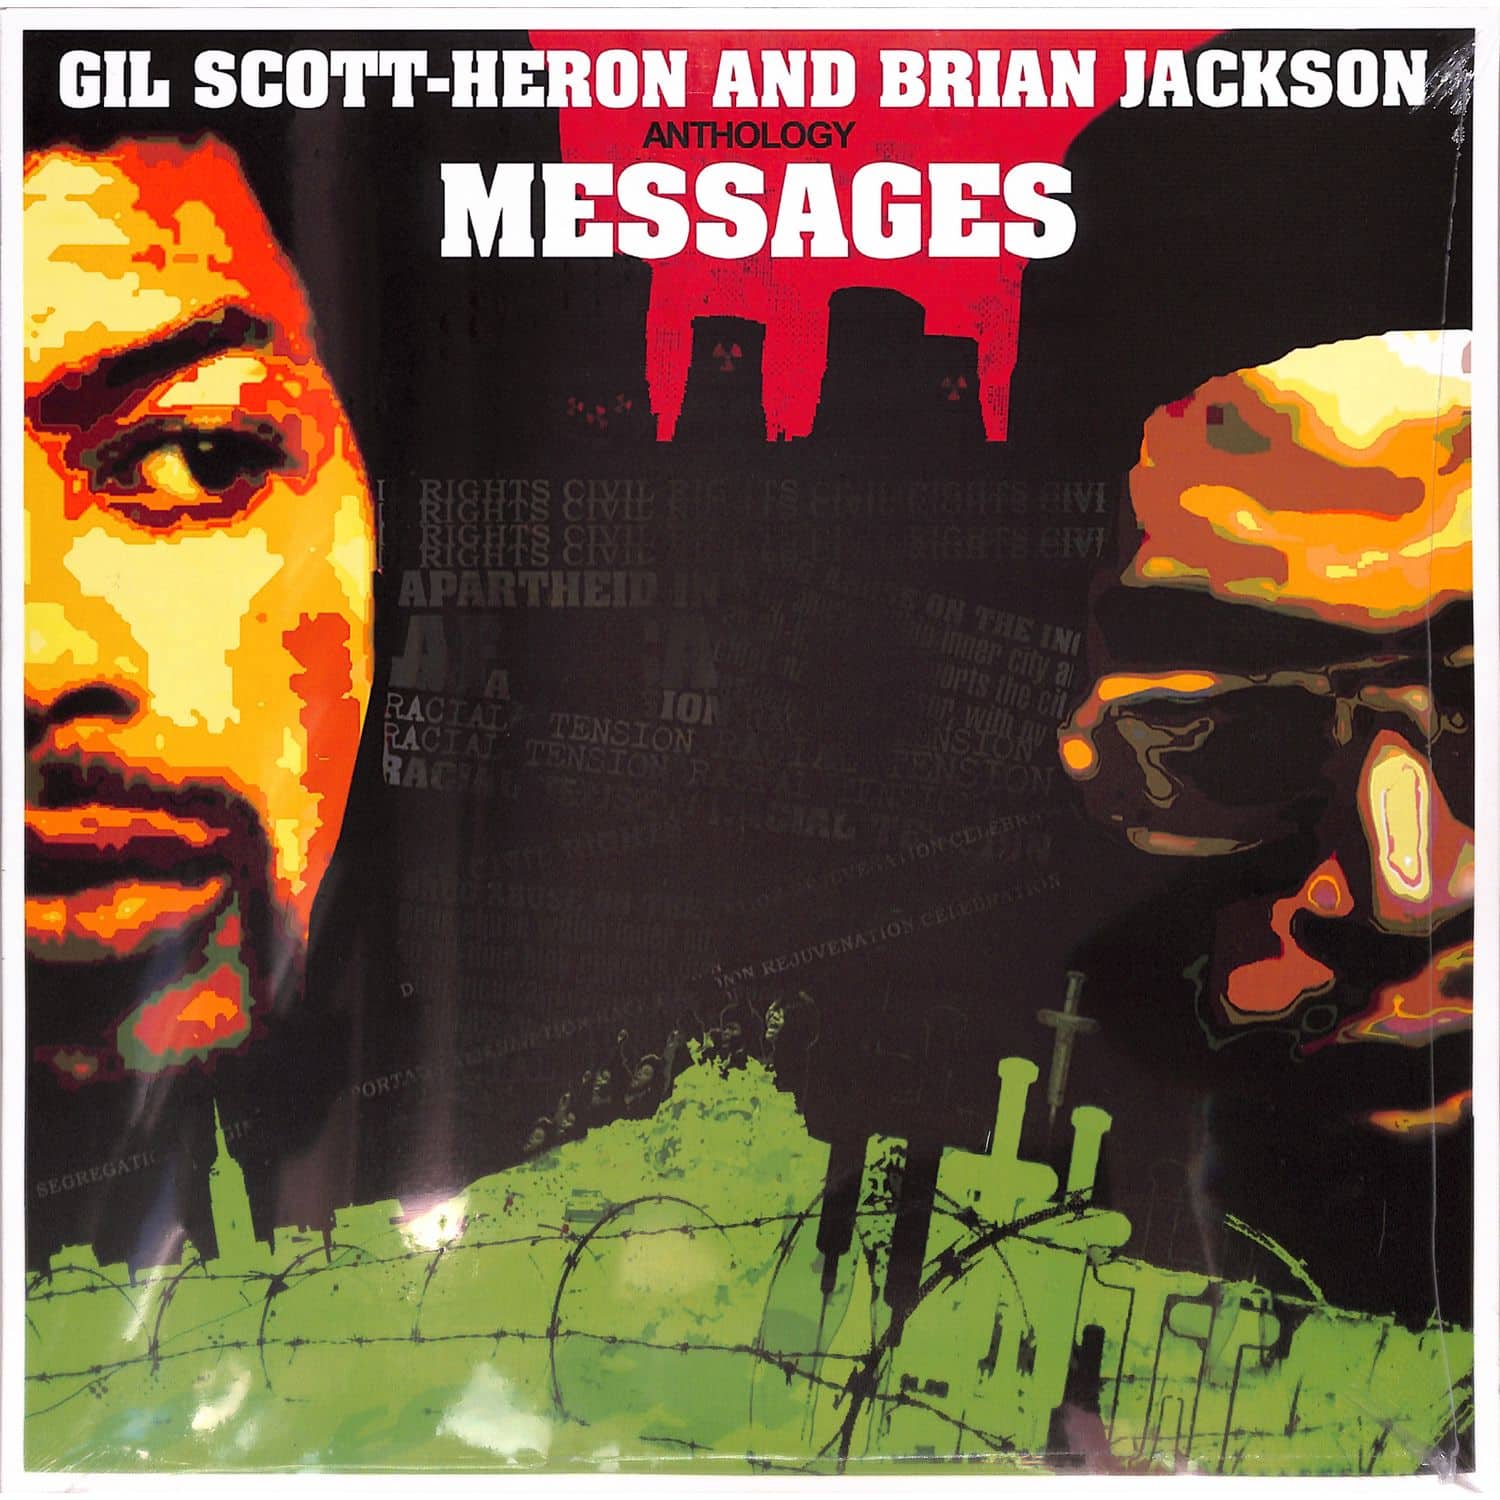 Gil Scott-Heron & Brian Jackson - ANTHOLOGY - MESSAGES 